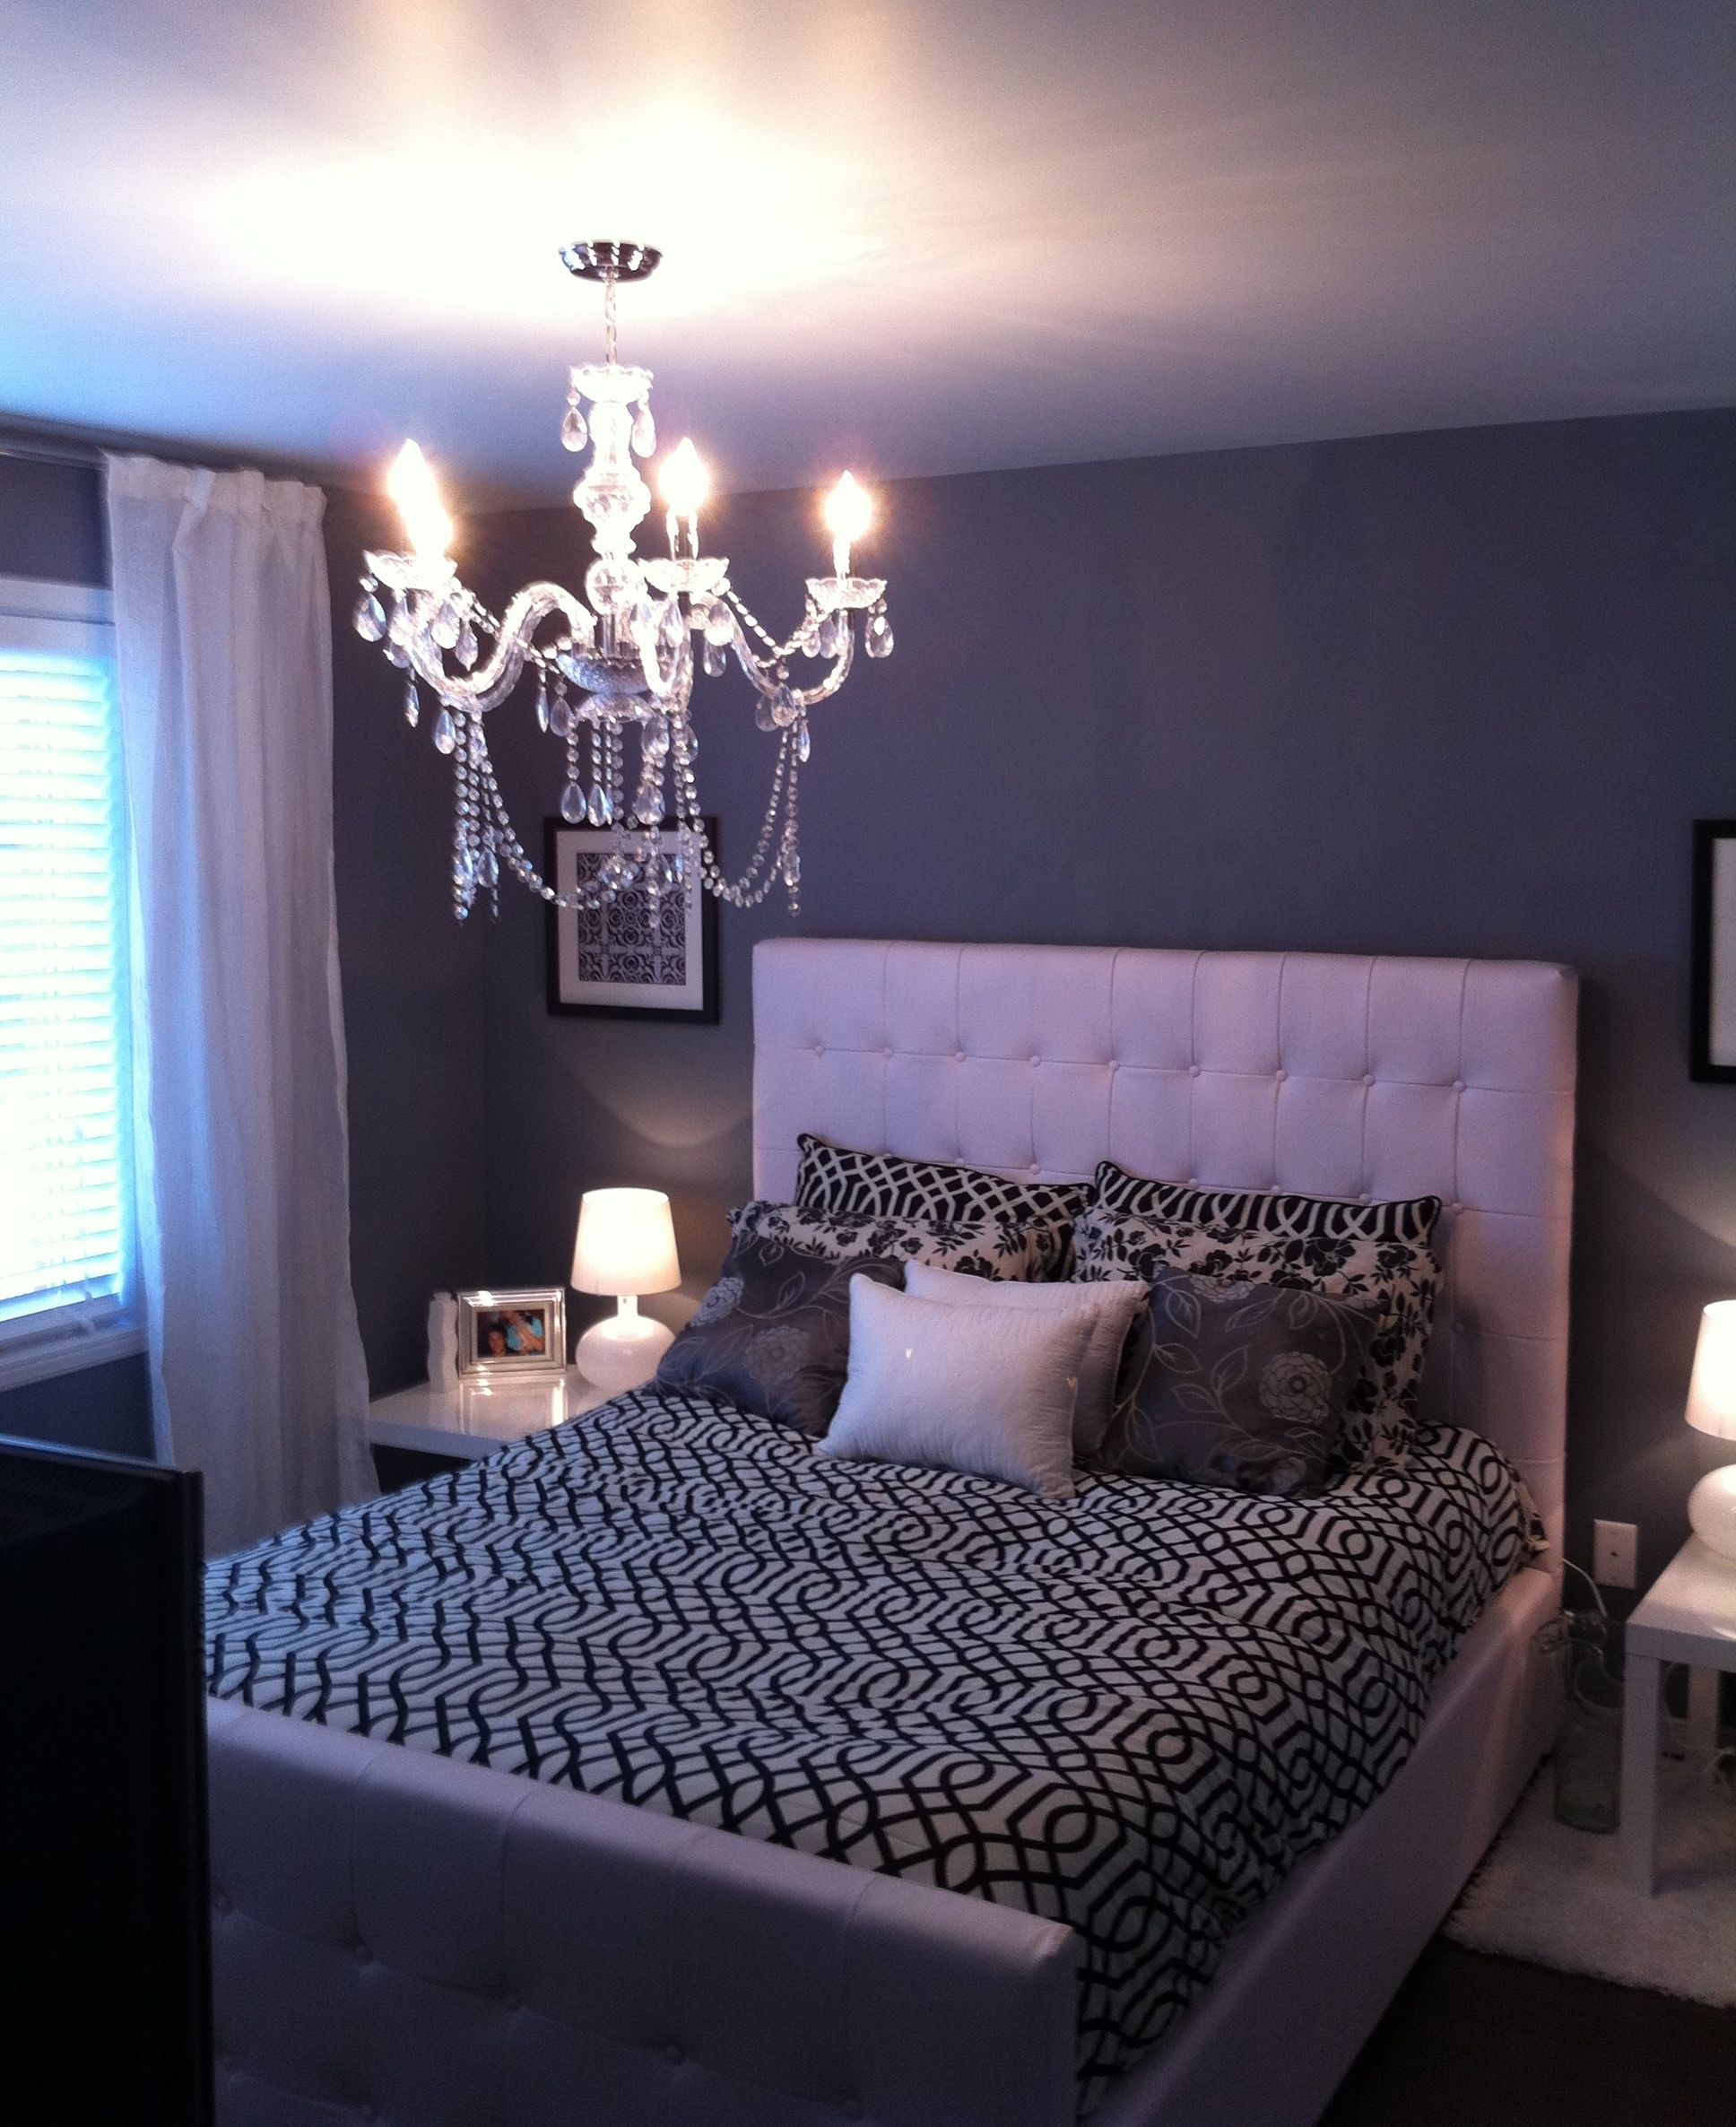 Bedrooms Mesmerizing Small Bedroom Chandeliers Mini Chandelier Inside Purple Crystal Chandelier Lights (View 23 of 25)